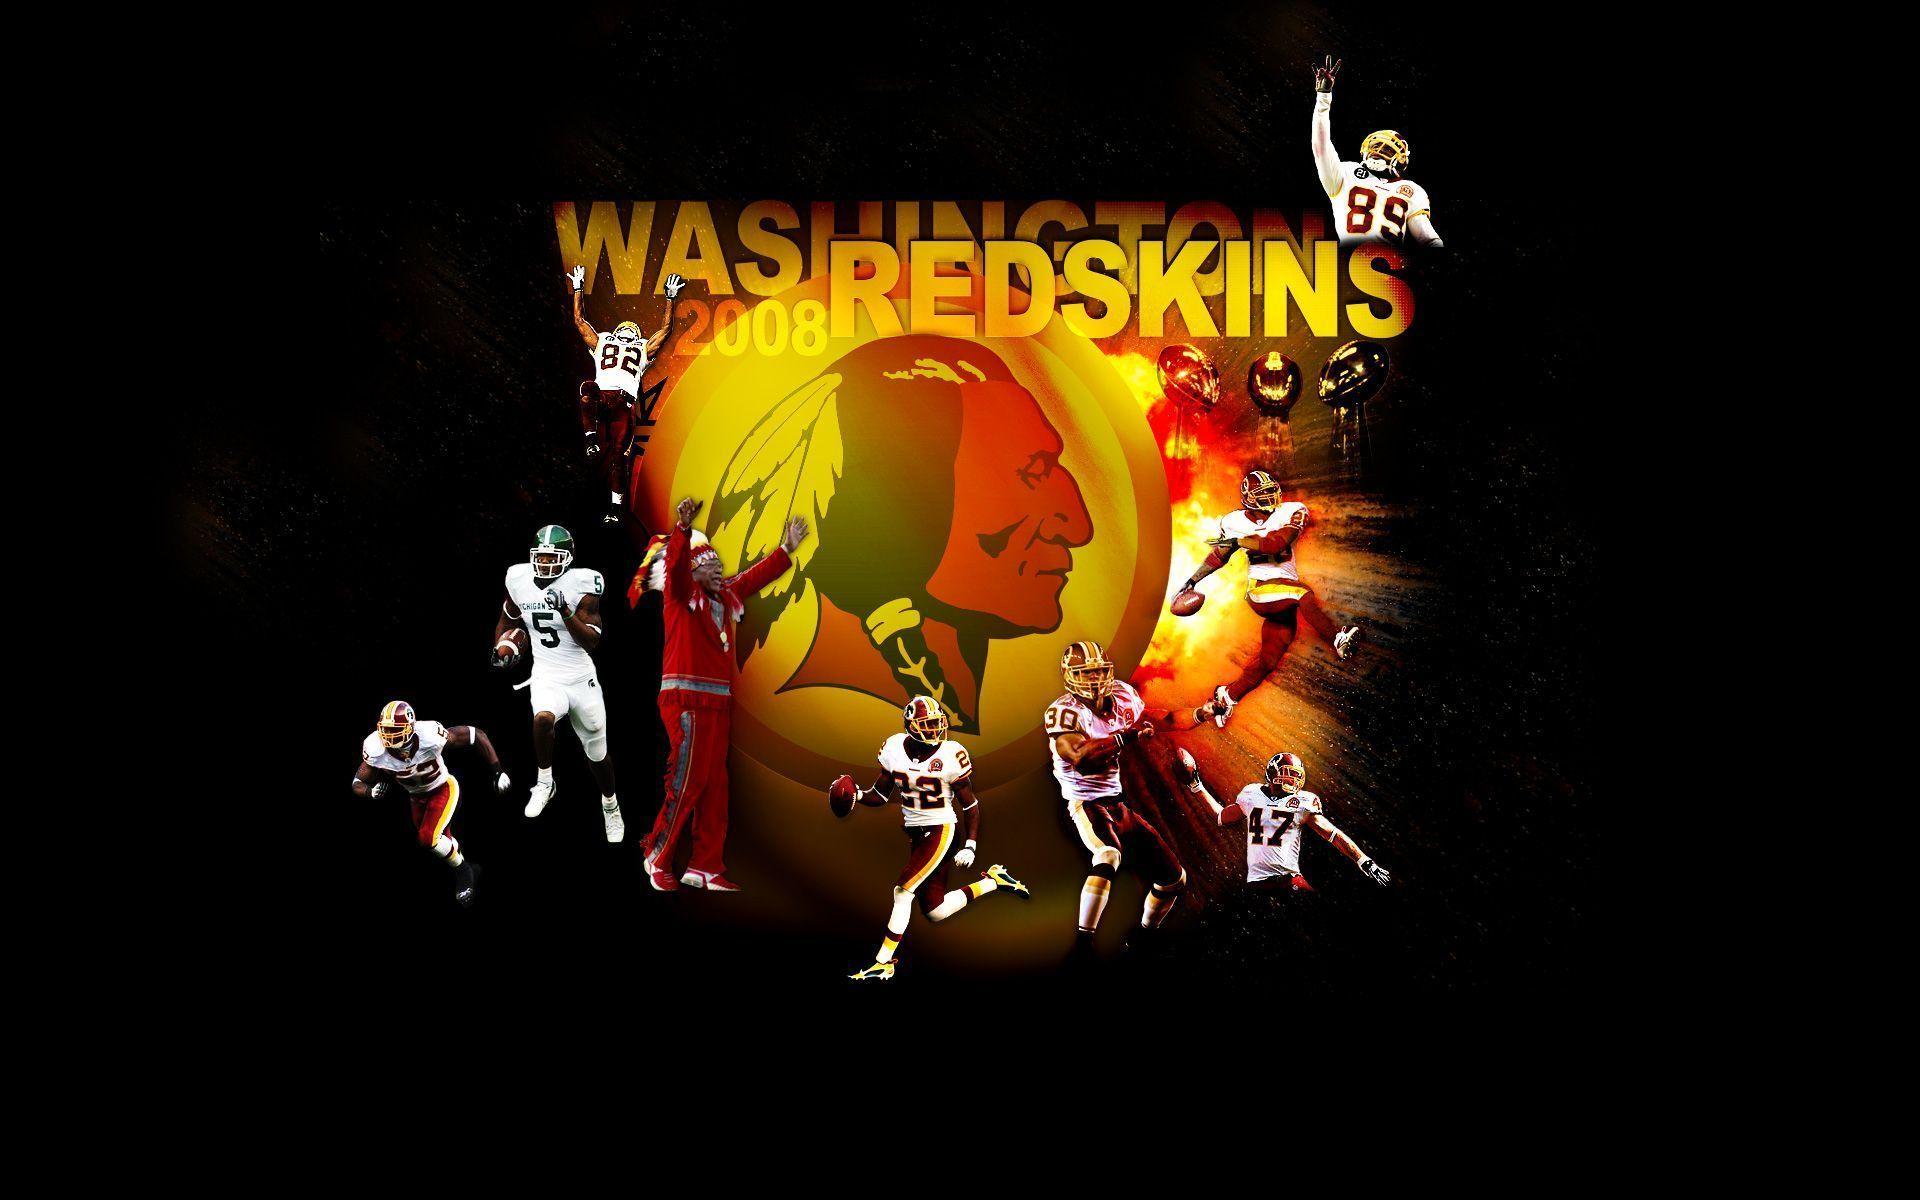 Washington Redskins Players Logo Wallpaper. All Best Image